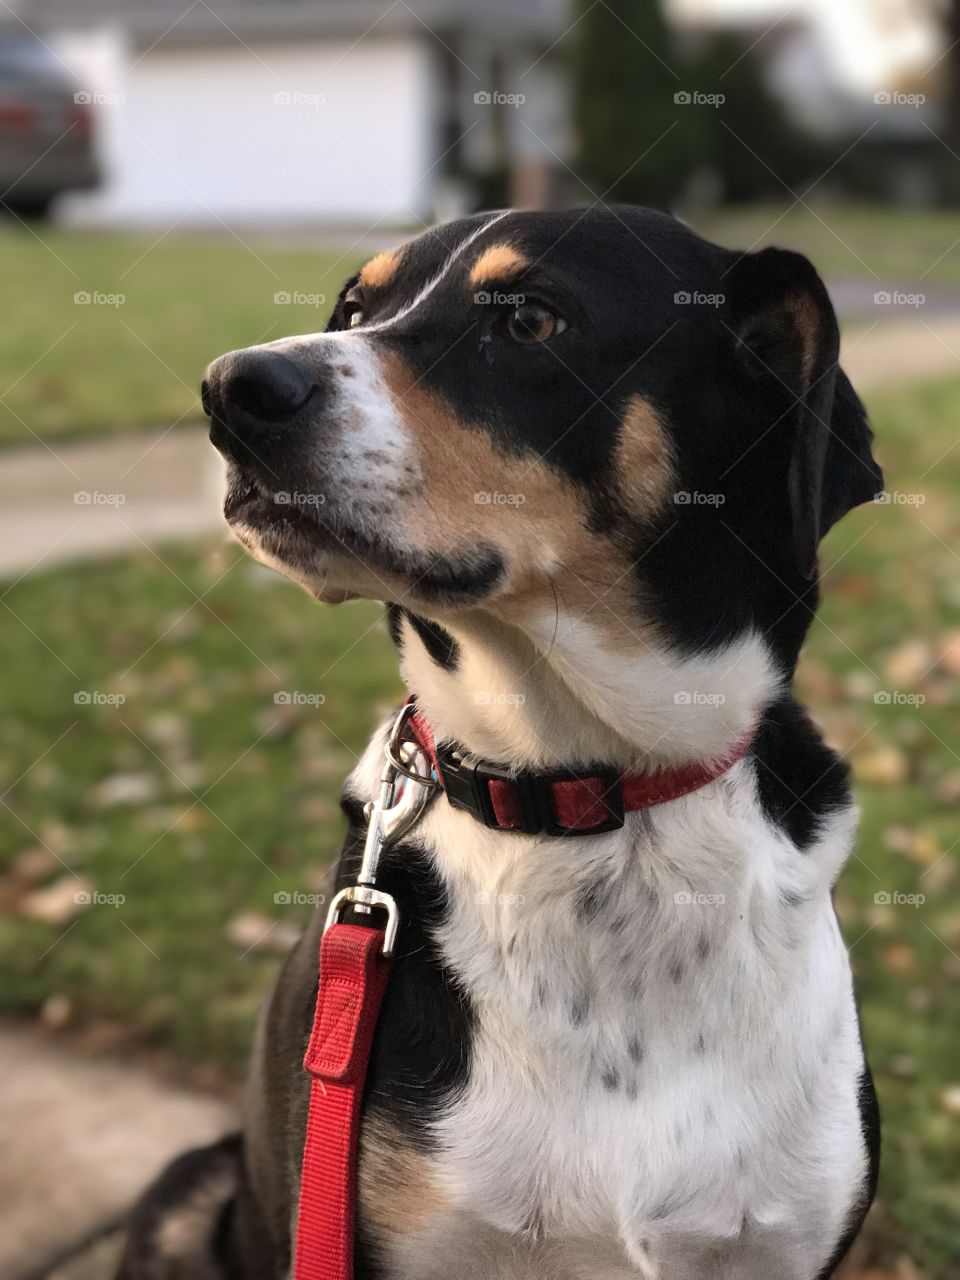 My beagle mix Kiko enjoying the weather!